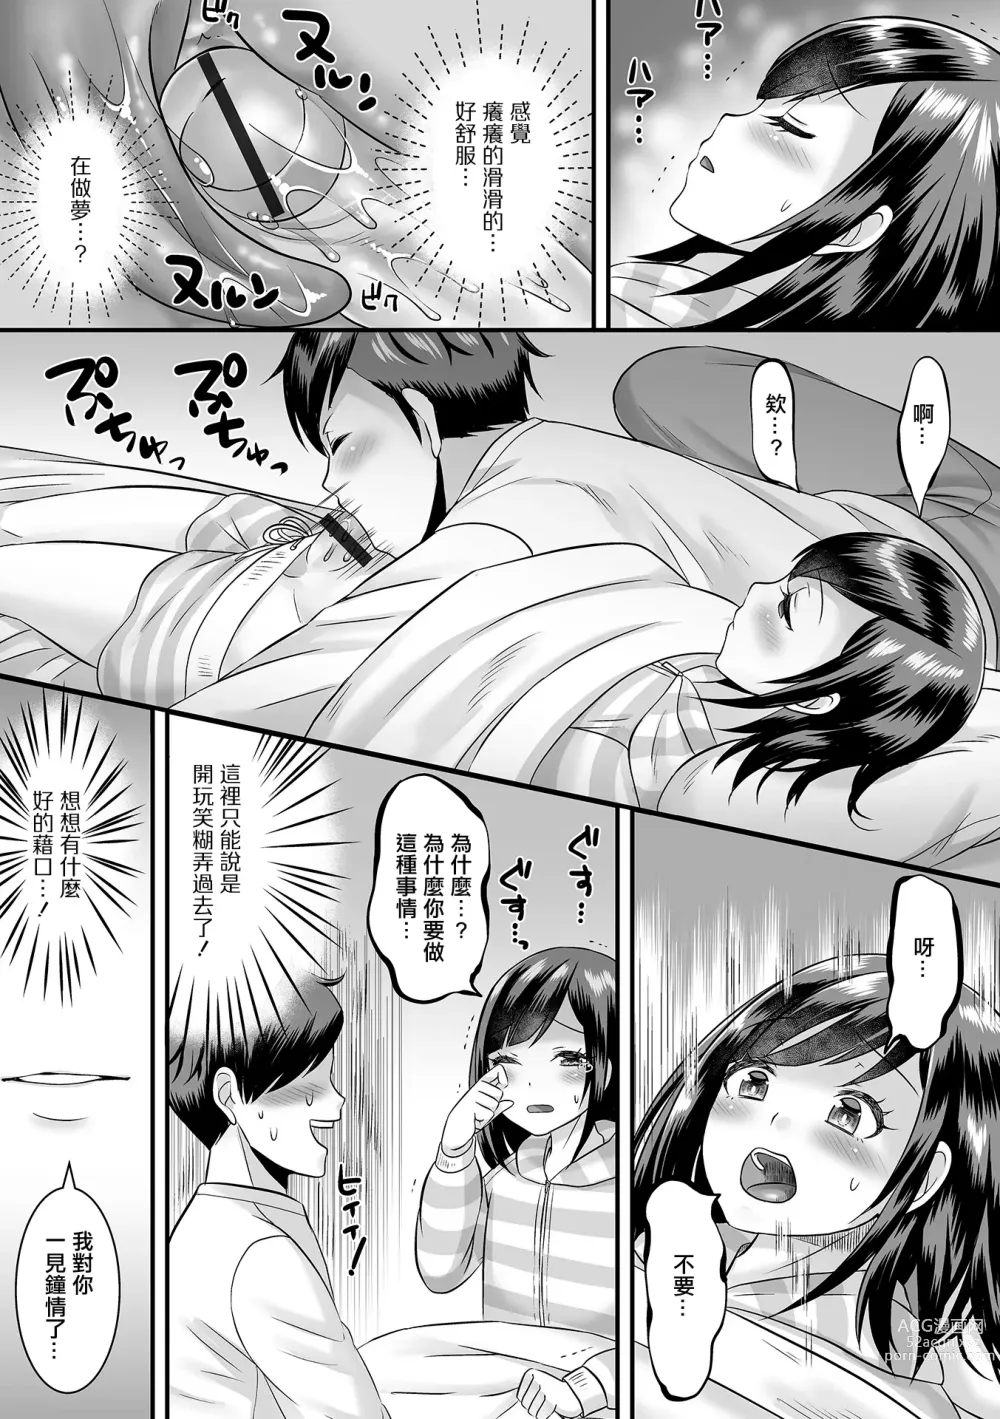 Page 7 of manga 這種孩子來我家了該怎麼辦!?